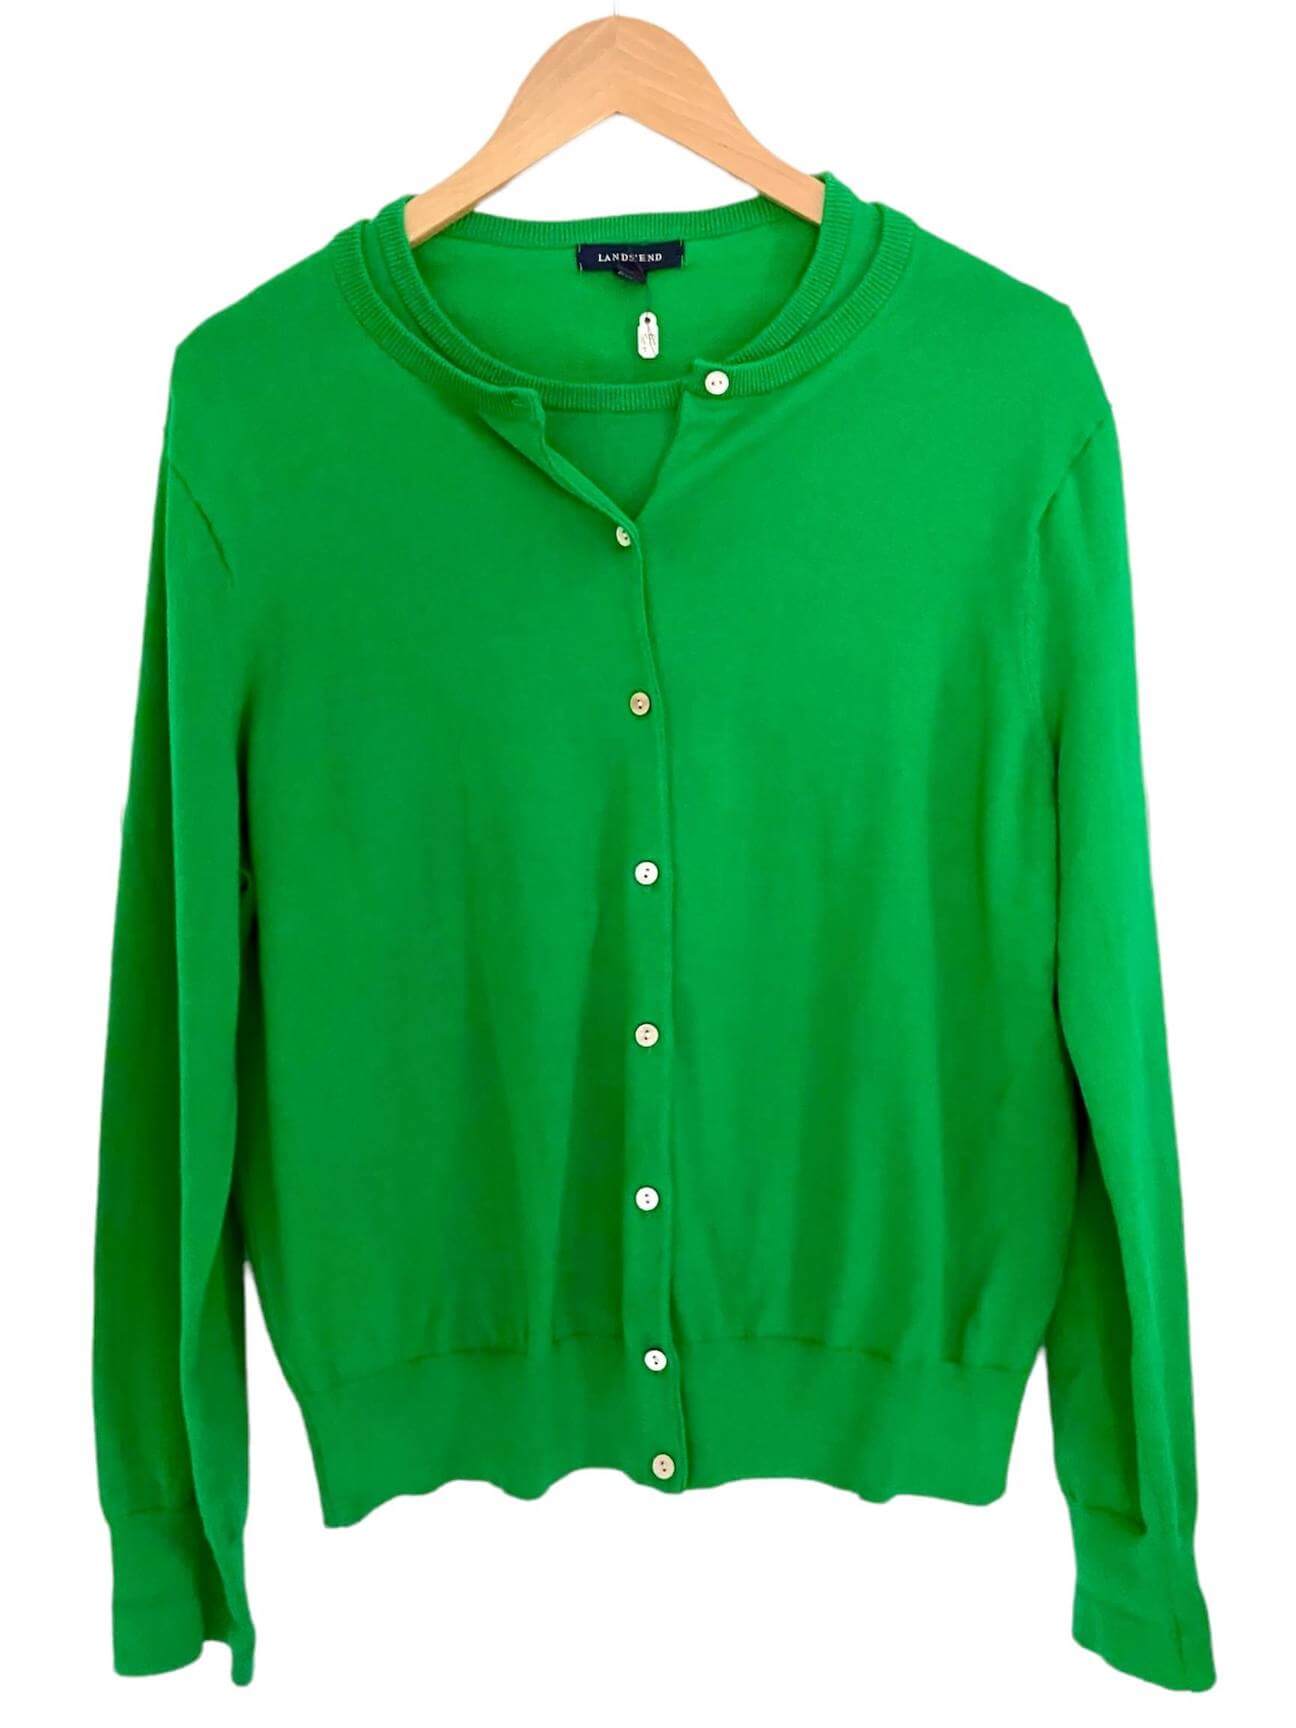 Bright Spring LANDS' END green cardigan sweater set